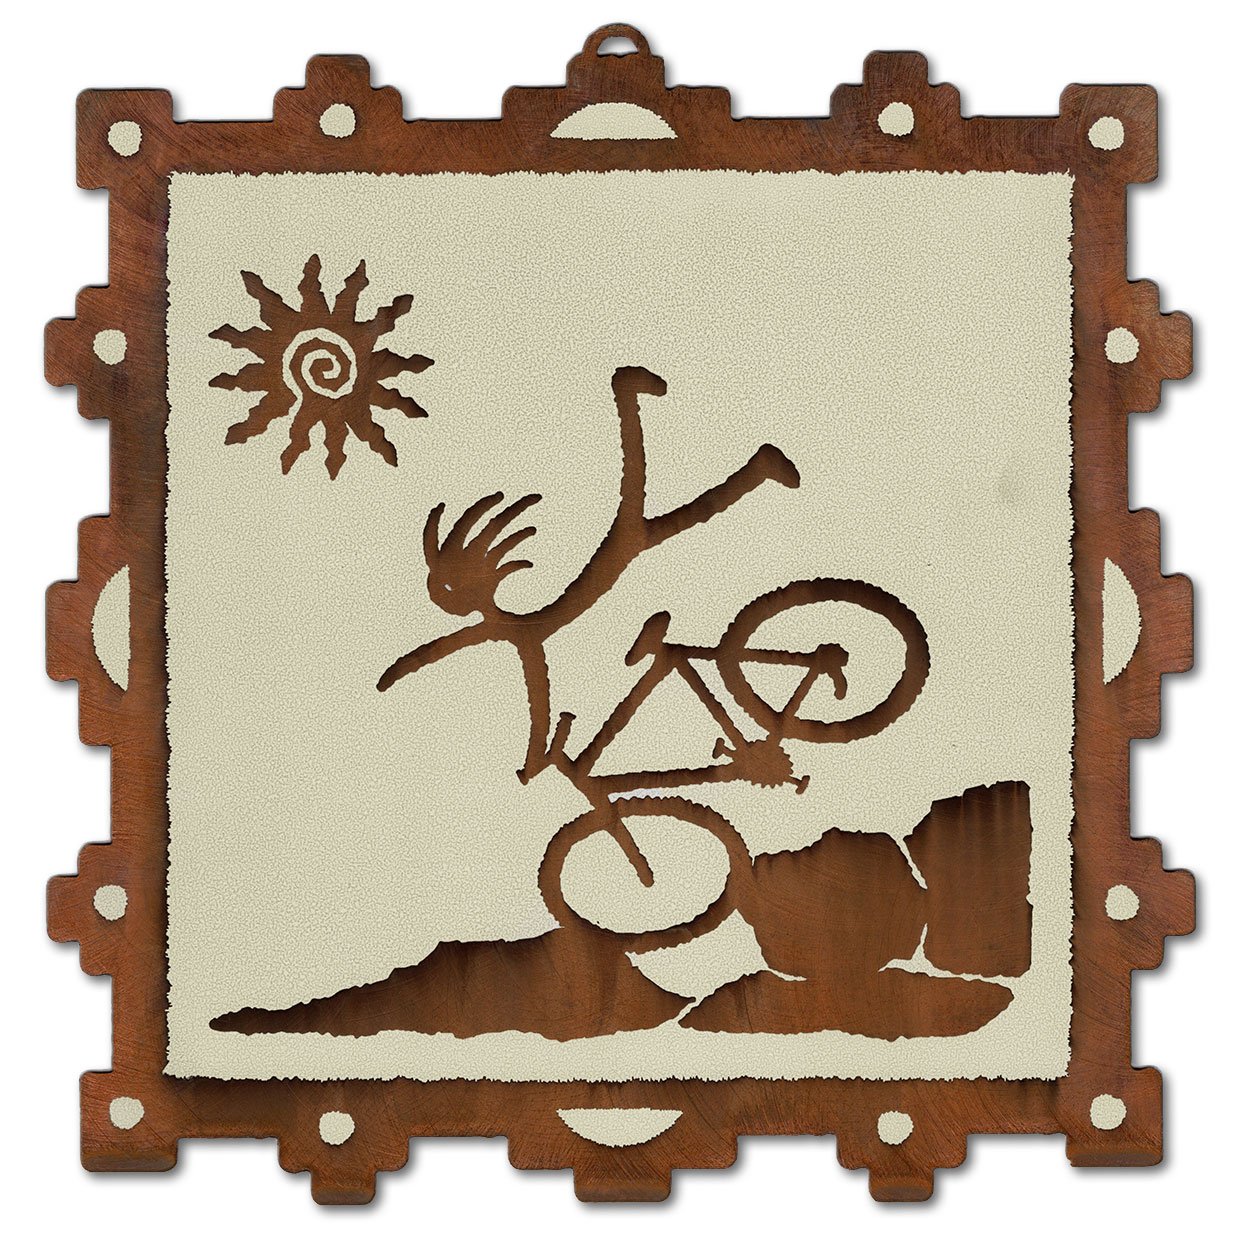 165876 - 10in Silk Screen Rustic Metal Wall Art - Endo Cyclist